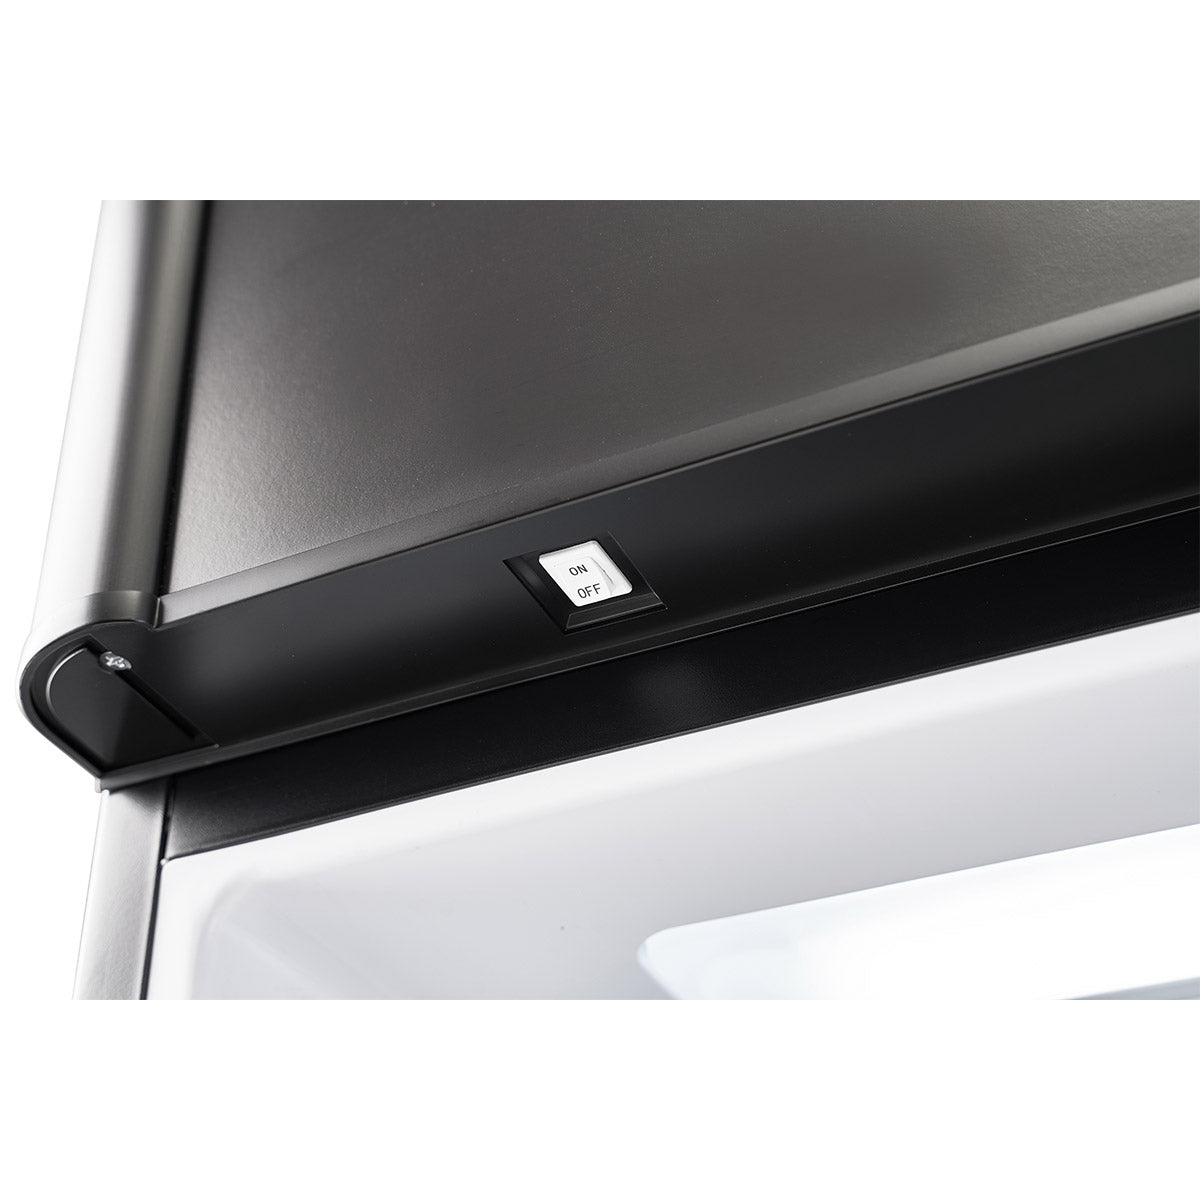 Premium Levella 9 cu. ft Black Upright Single Glass Door Display Refrigerator